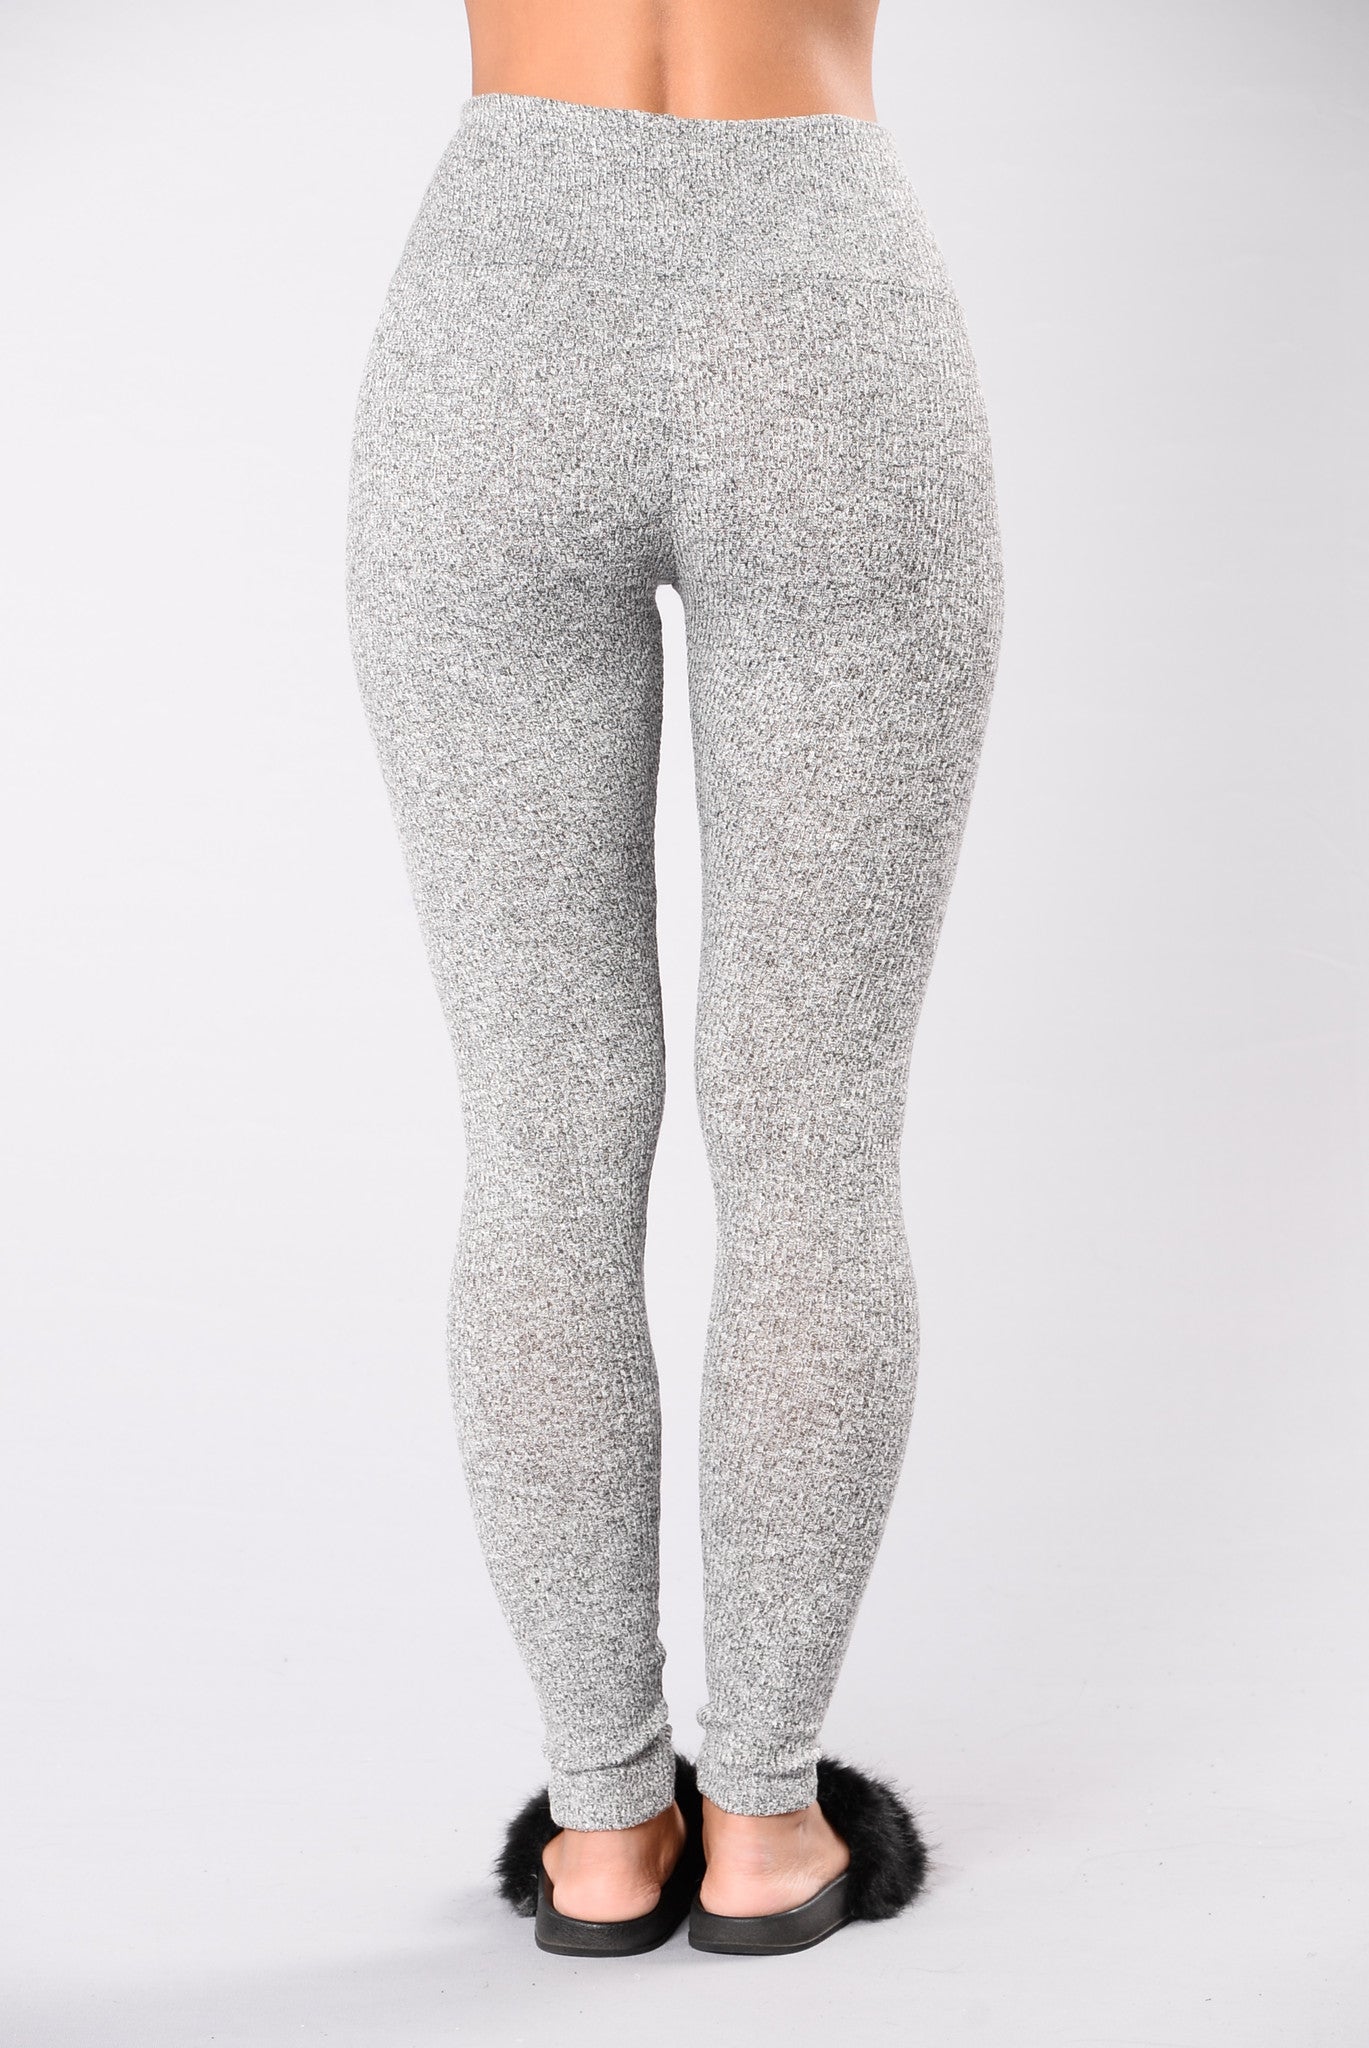 Eruption Leggings - Grey | Leggings by Fashion Nova